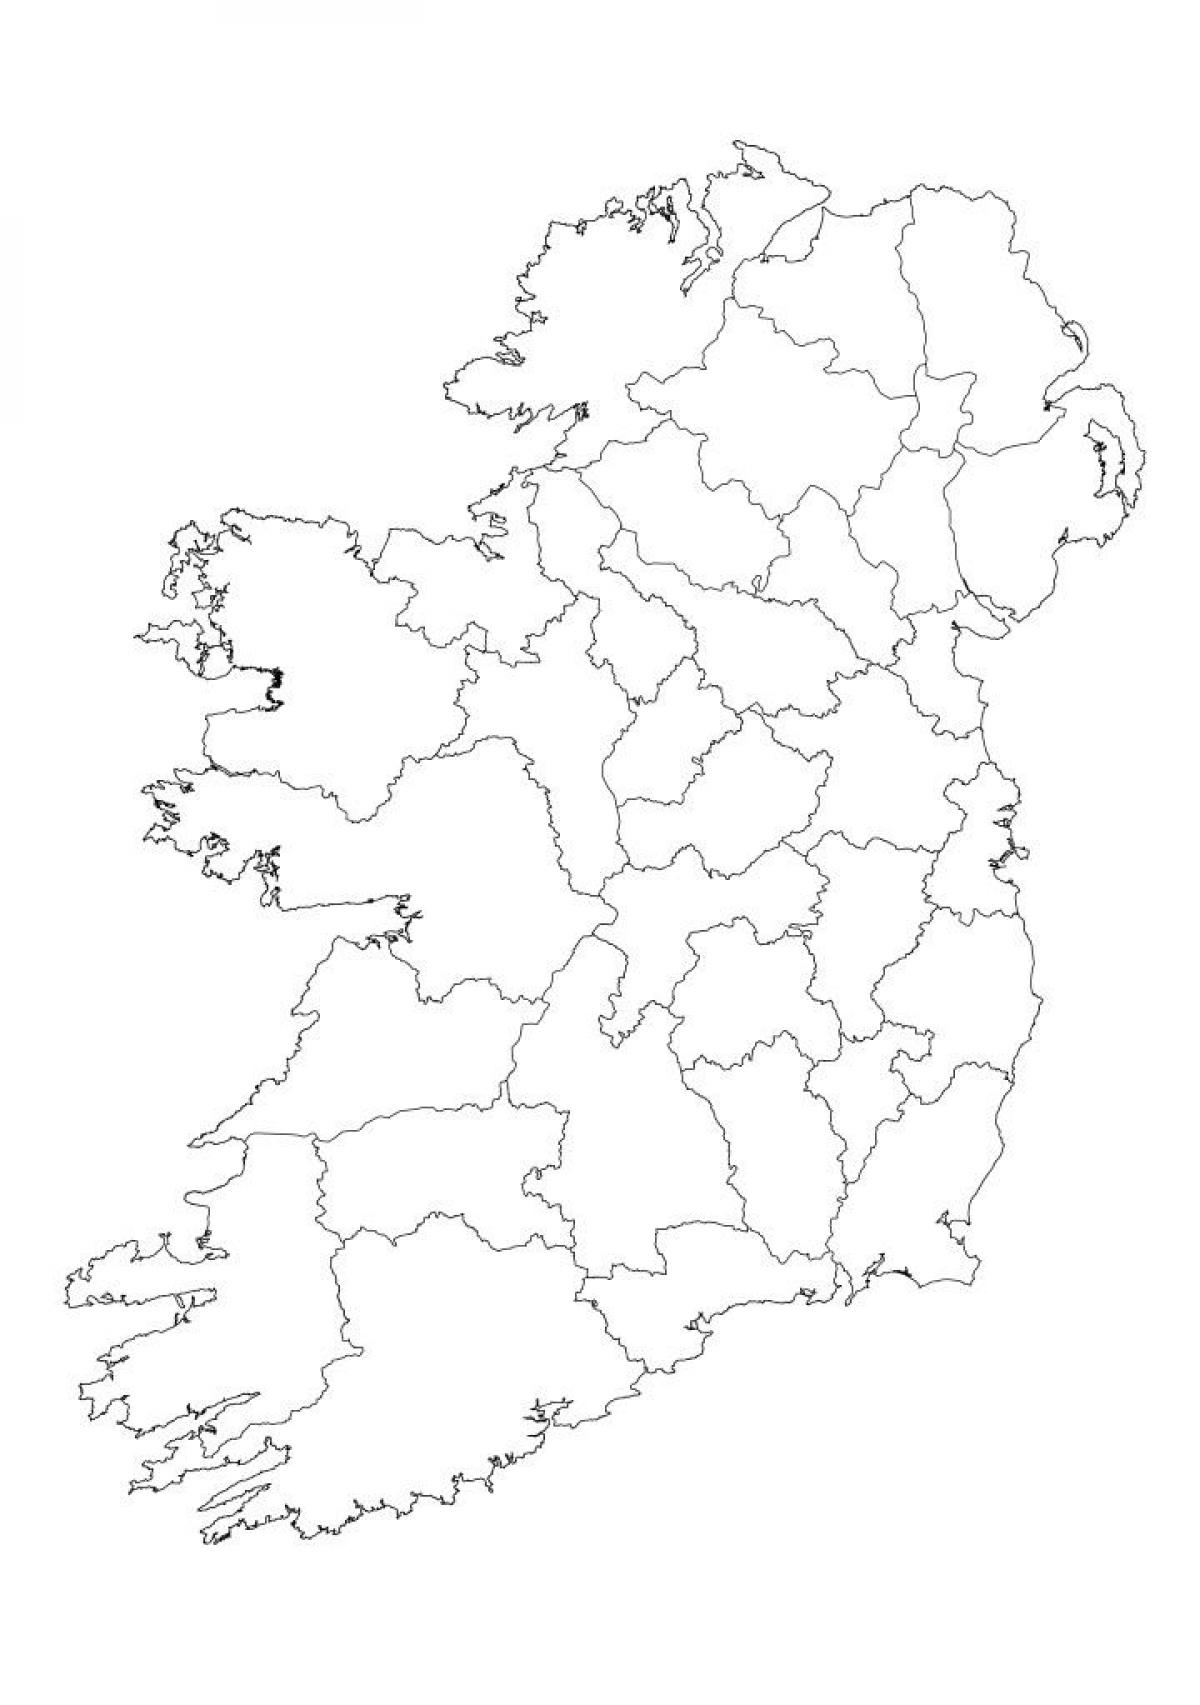 ireland-blank-map-ireland-map-outline-northern-europe-europe